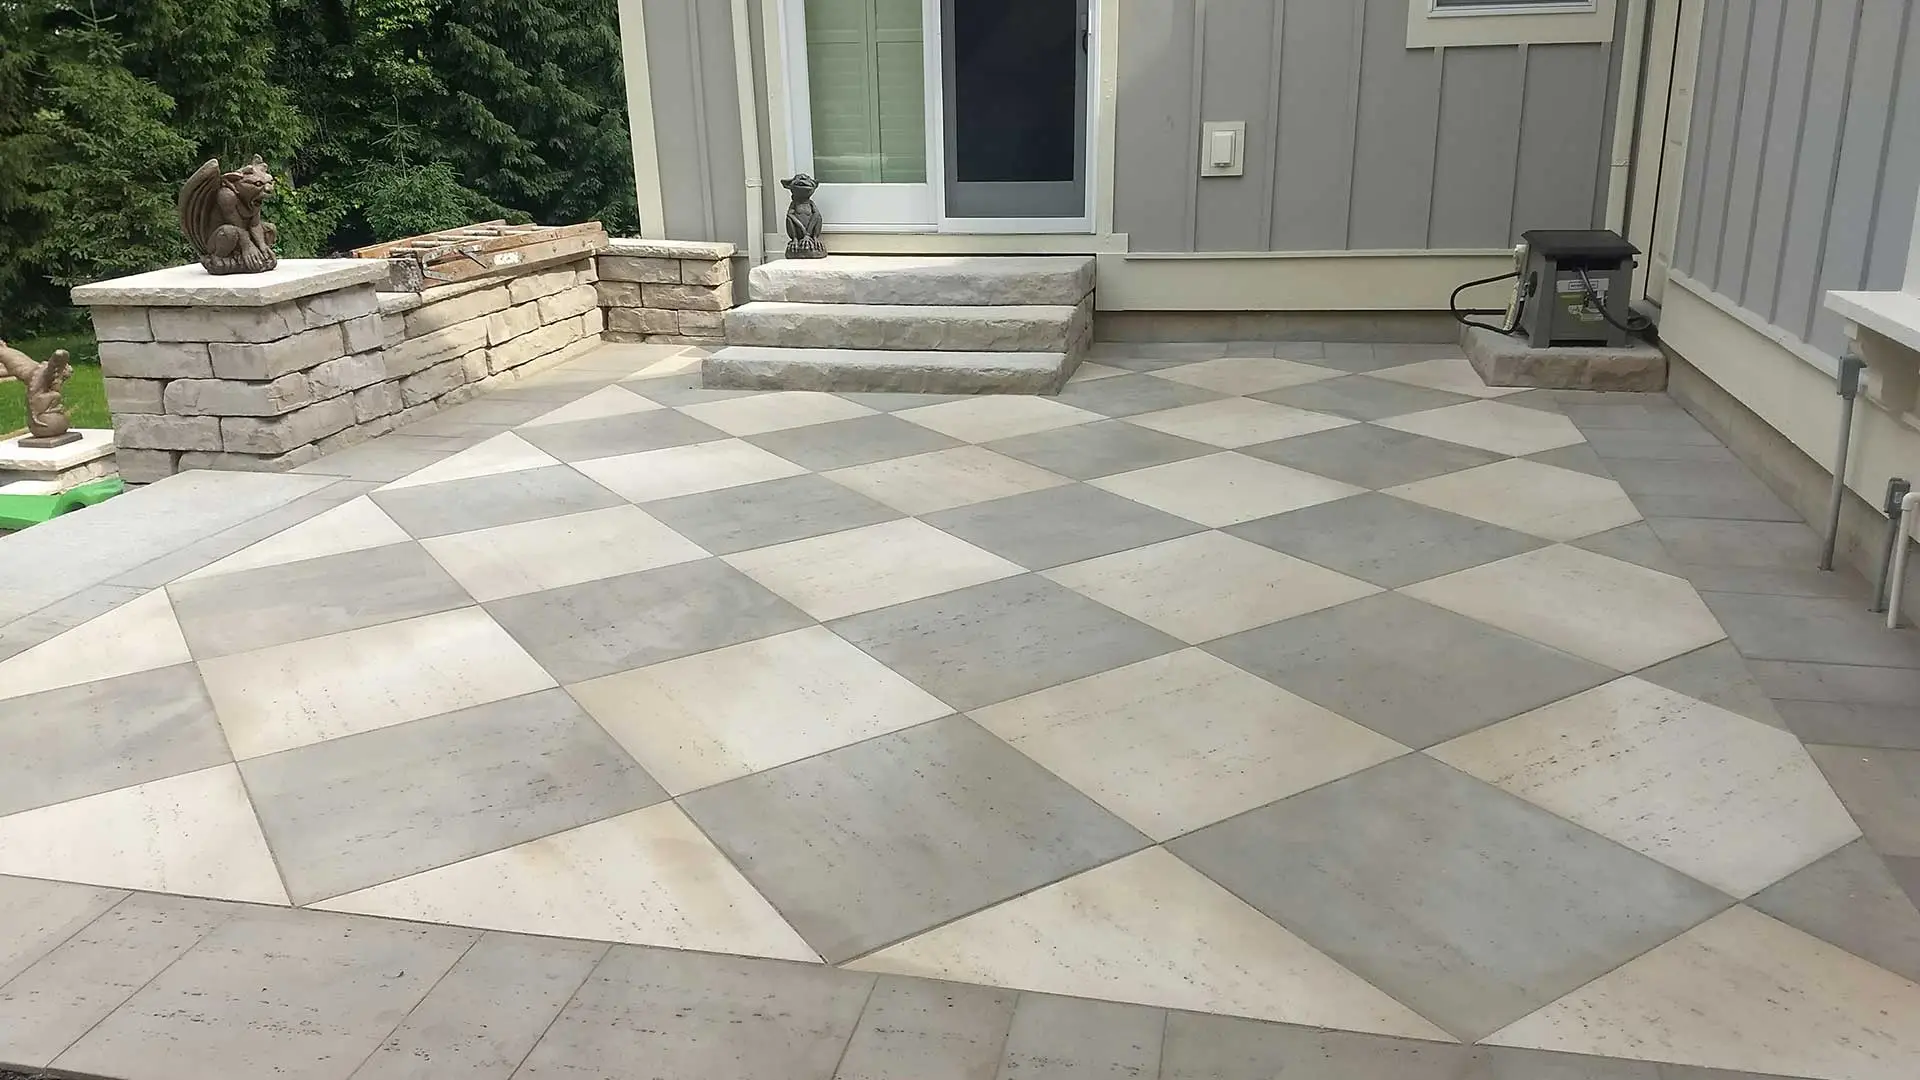 Checkered pattern patio construction in Grandville, MI.